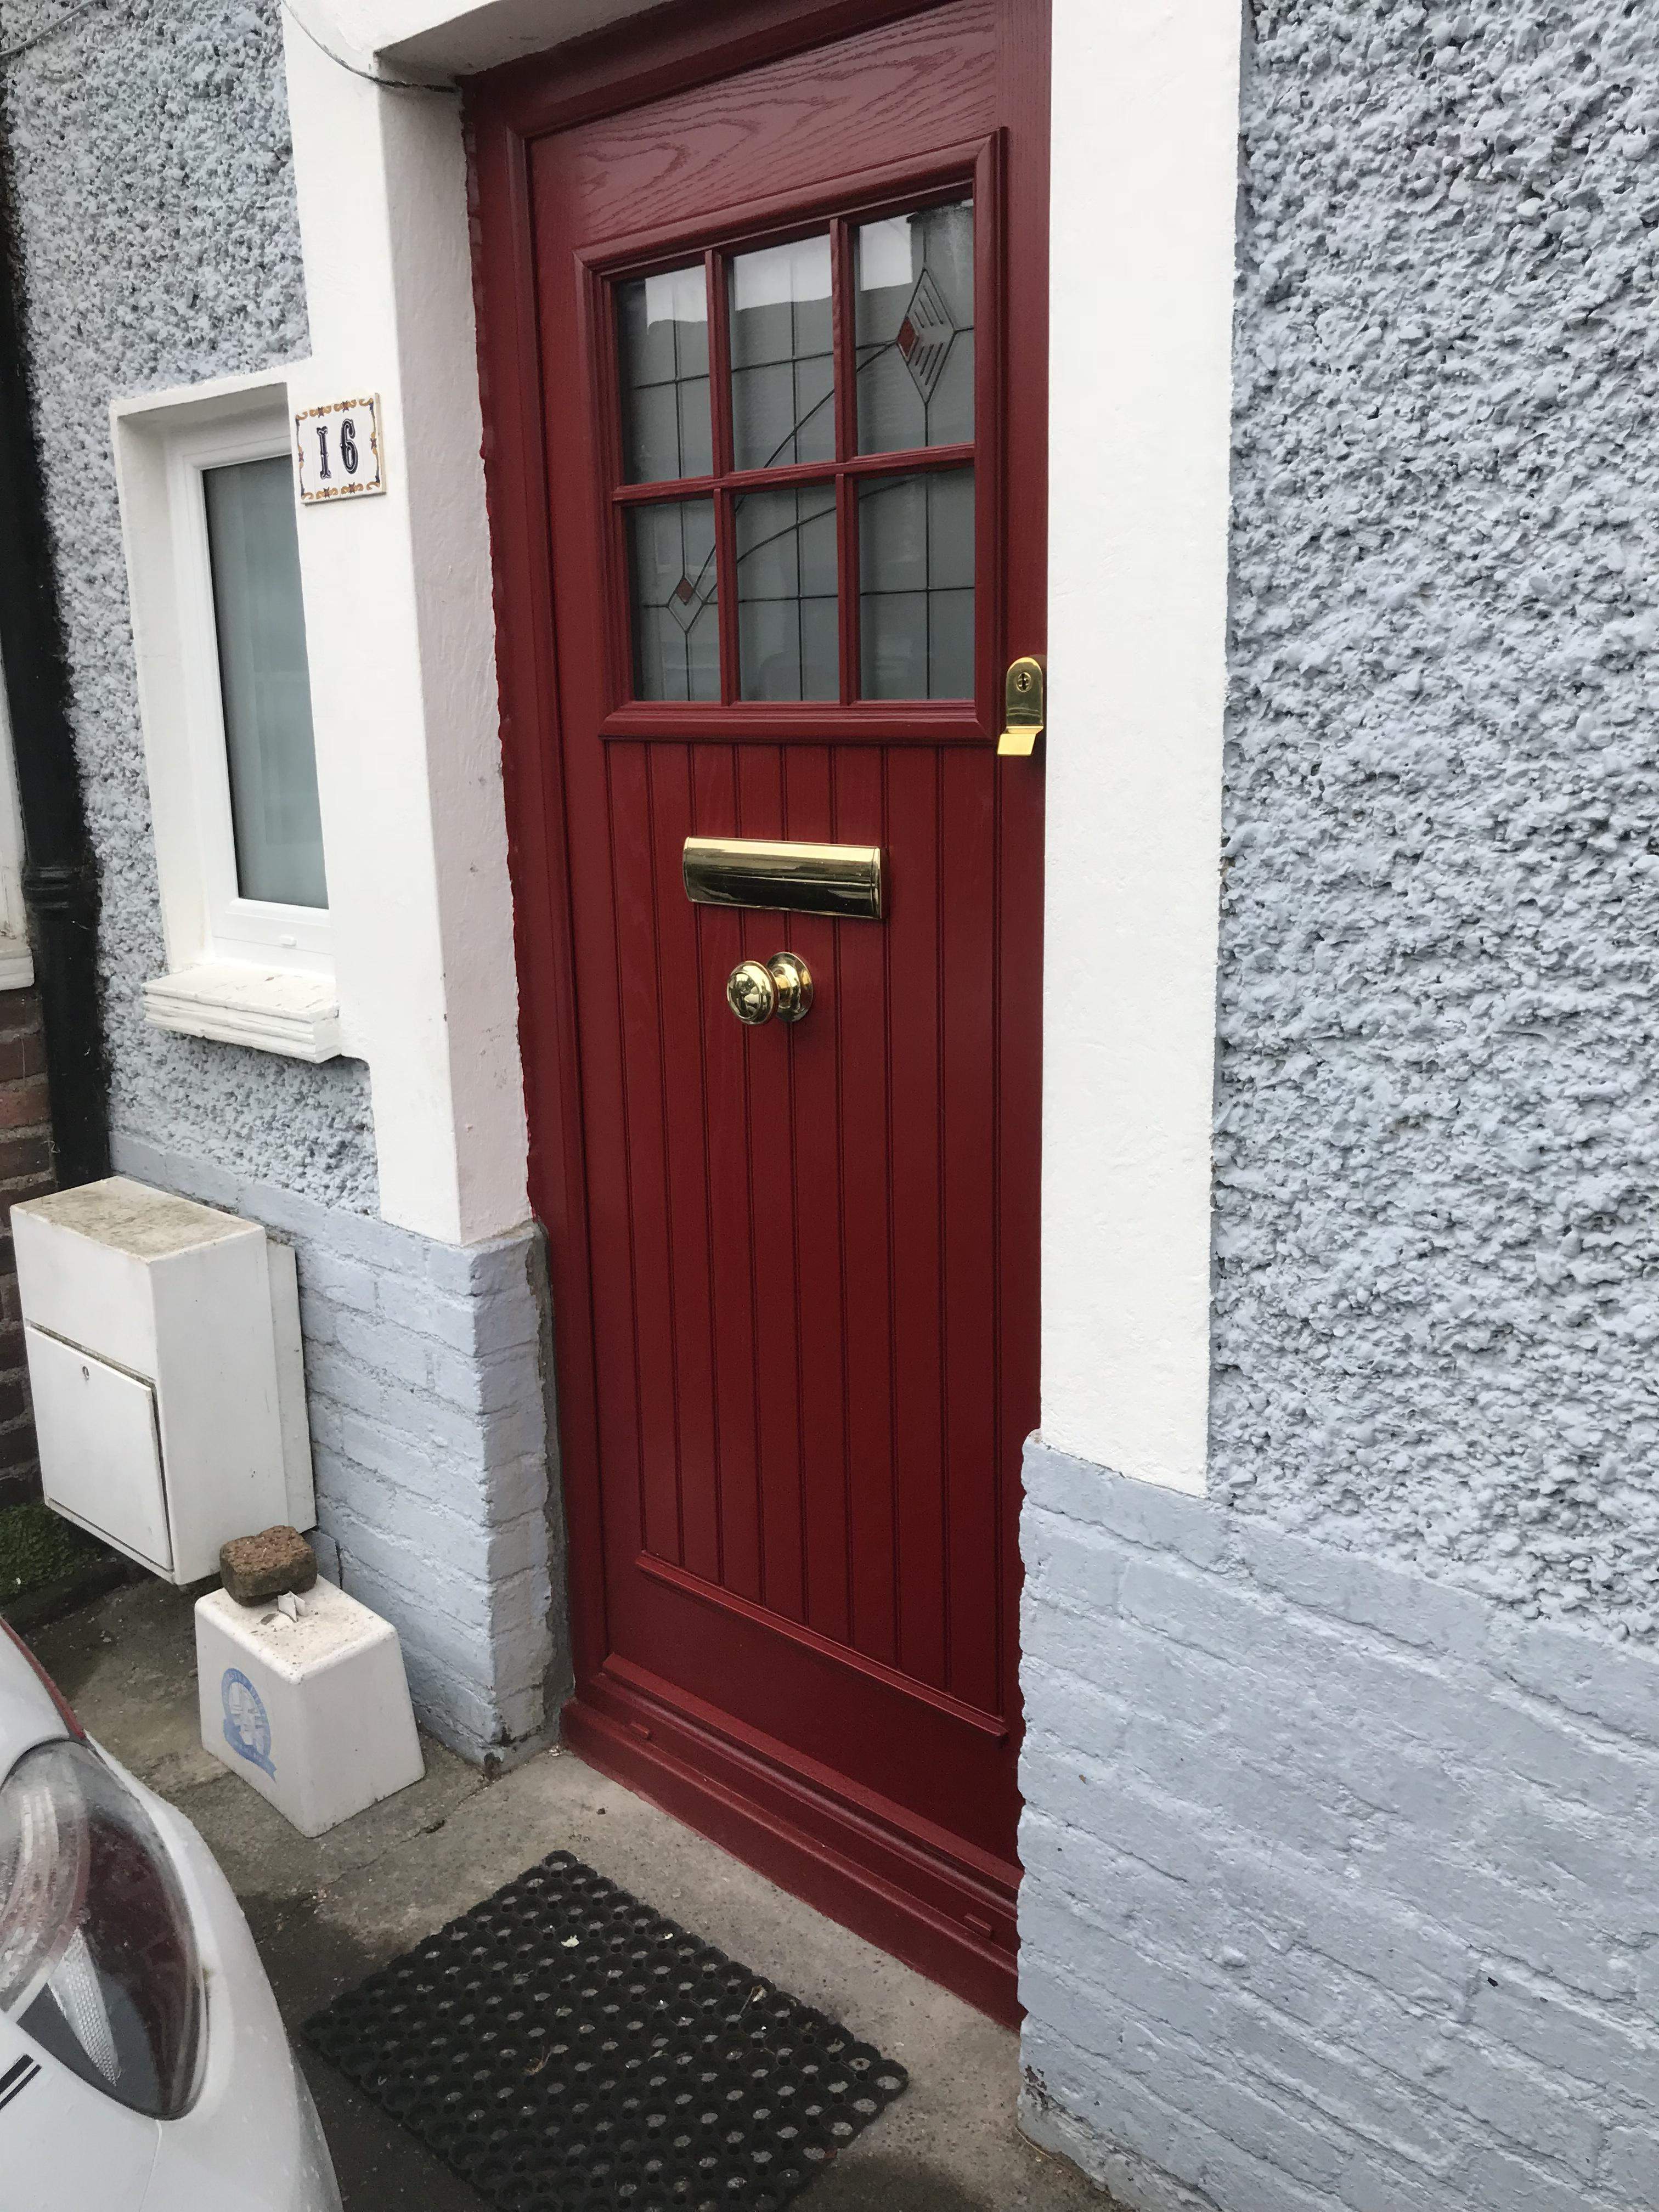 PALLADIO DUBLIN STYLE DOOR FITTED BY ASGARD WINDOWS IN DUBLIN 3